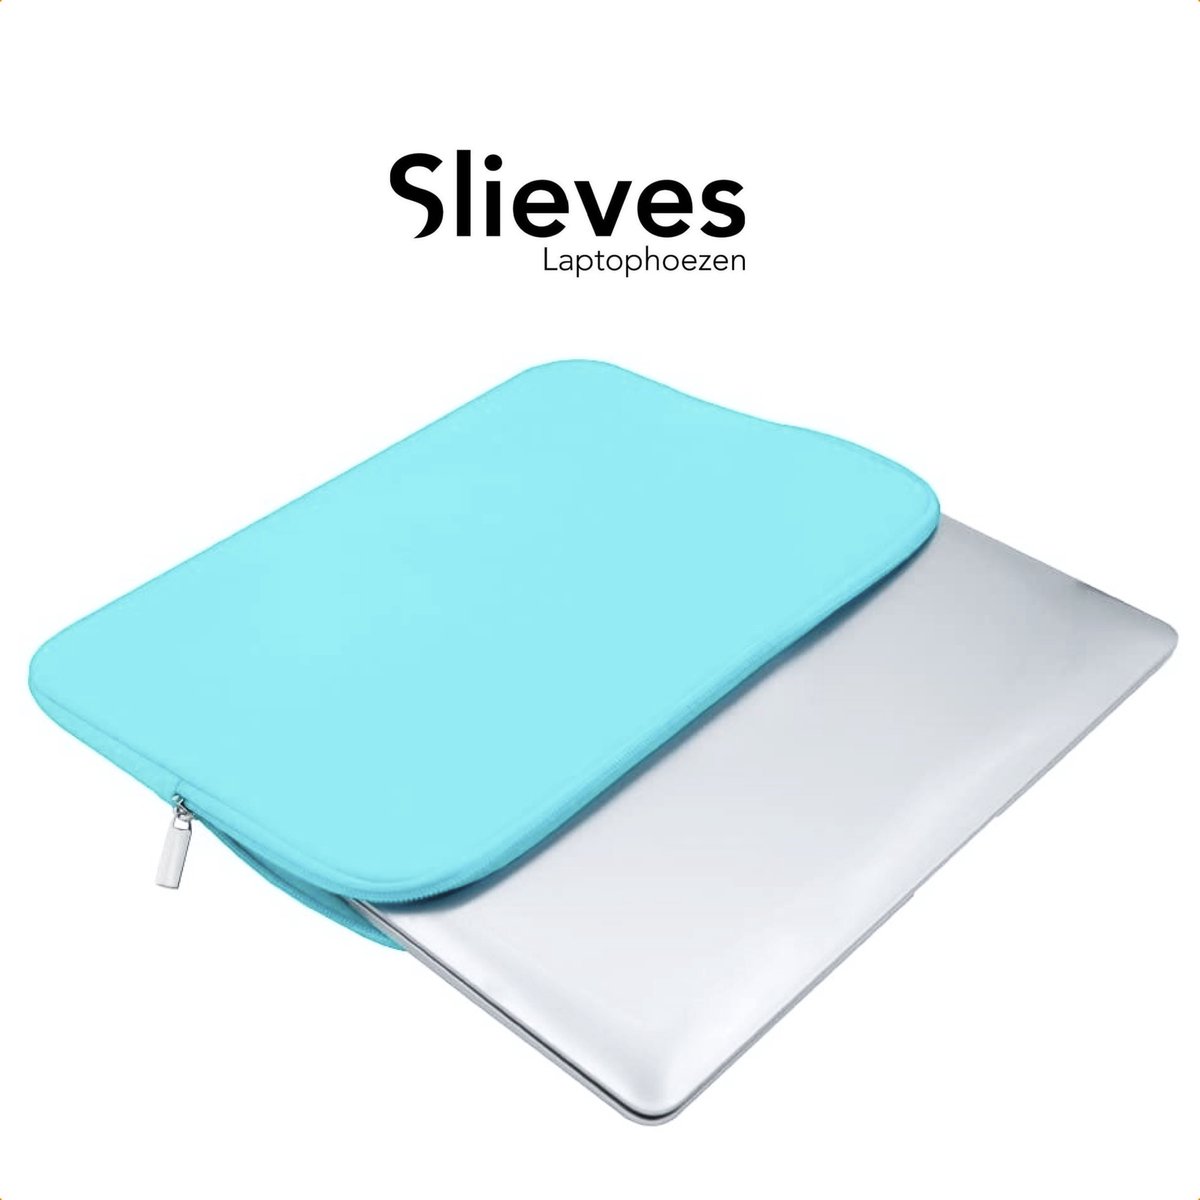 Slieves - Laptophoes - 14 inch - Laptop Sleeve - Schok Resistent - Neoprene - (Spat) Waterdicht - Blauw